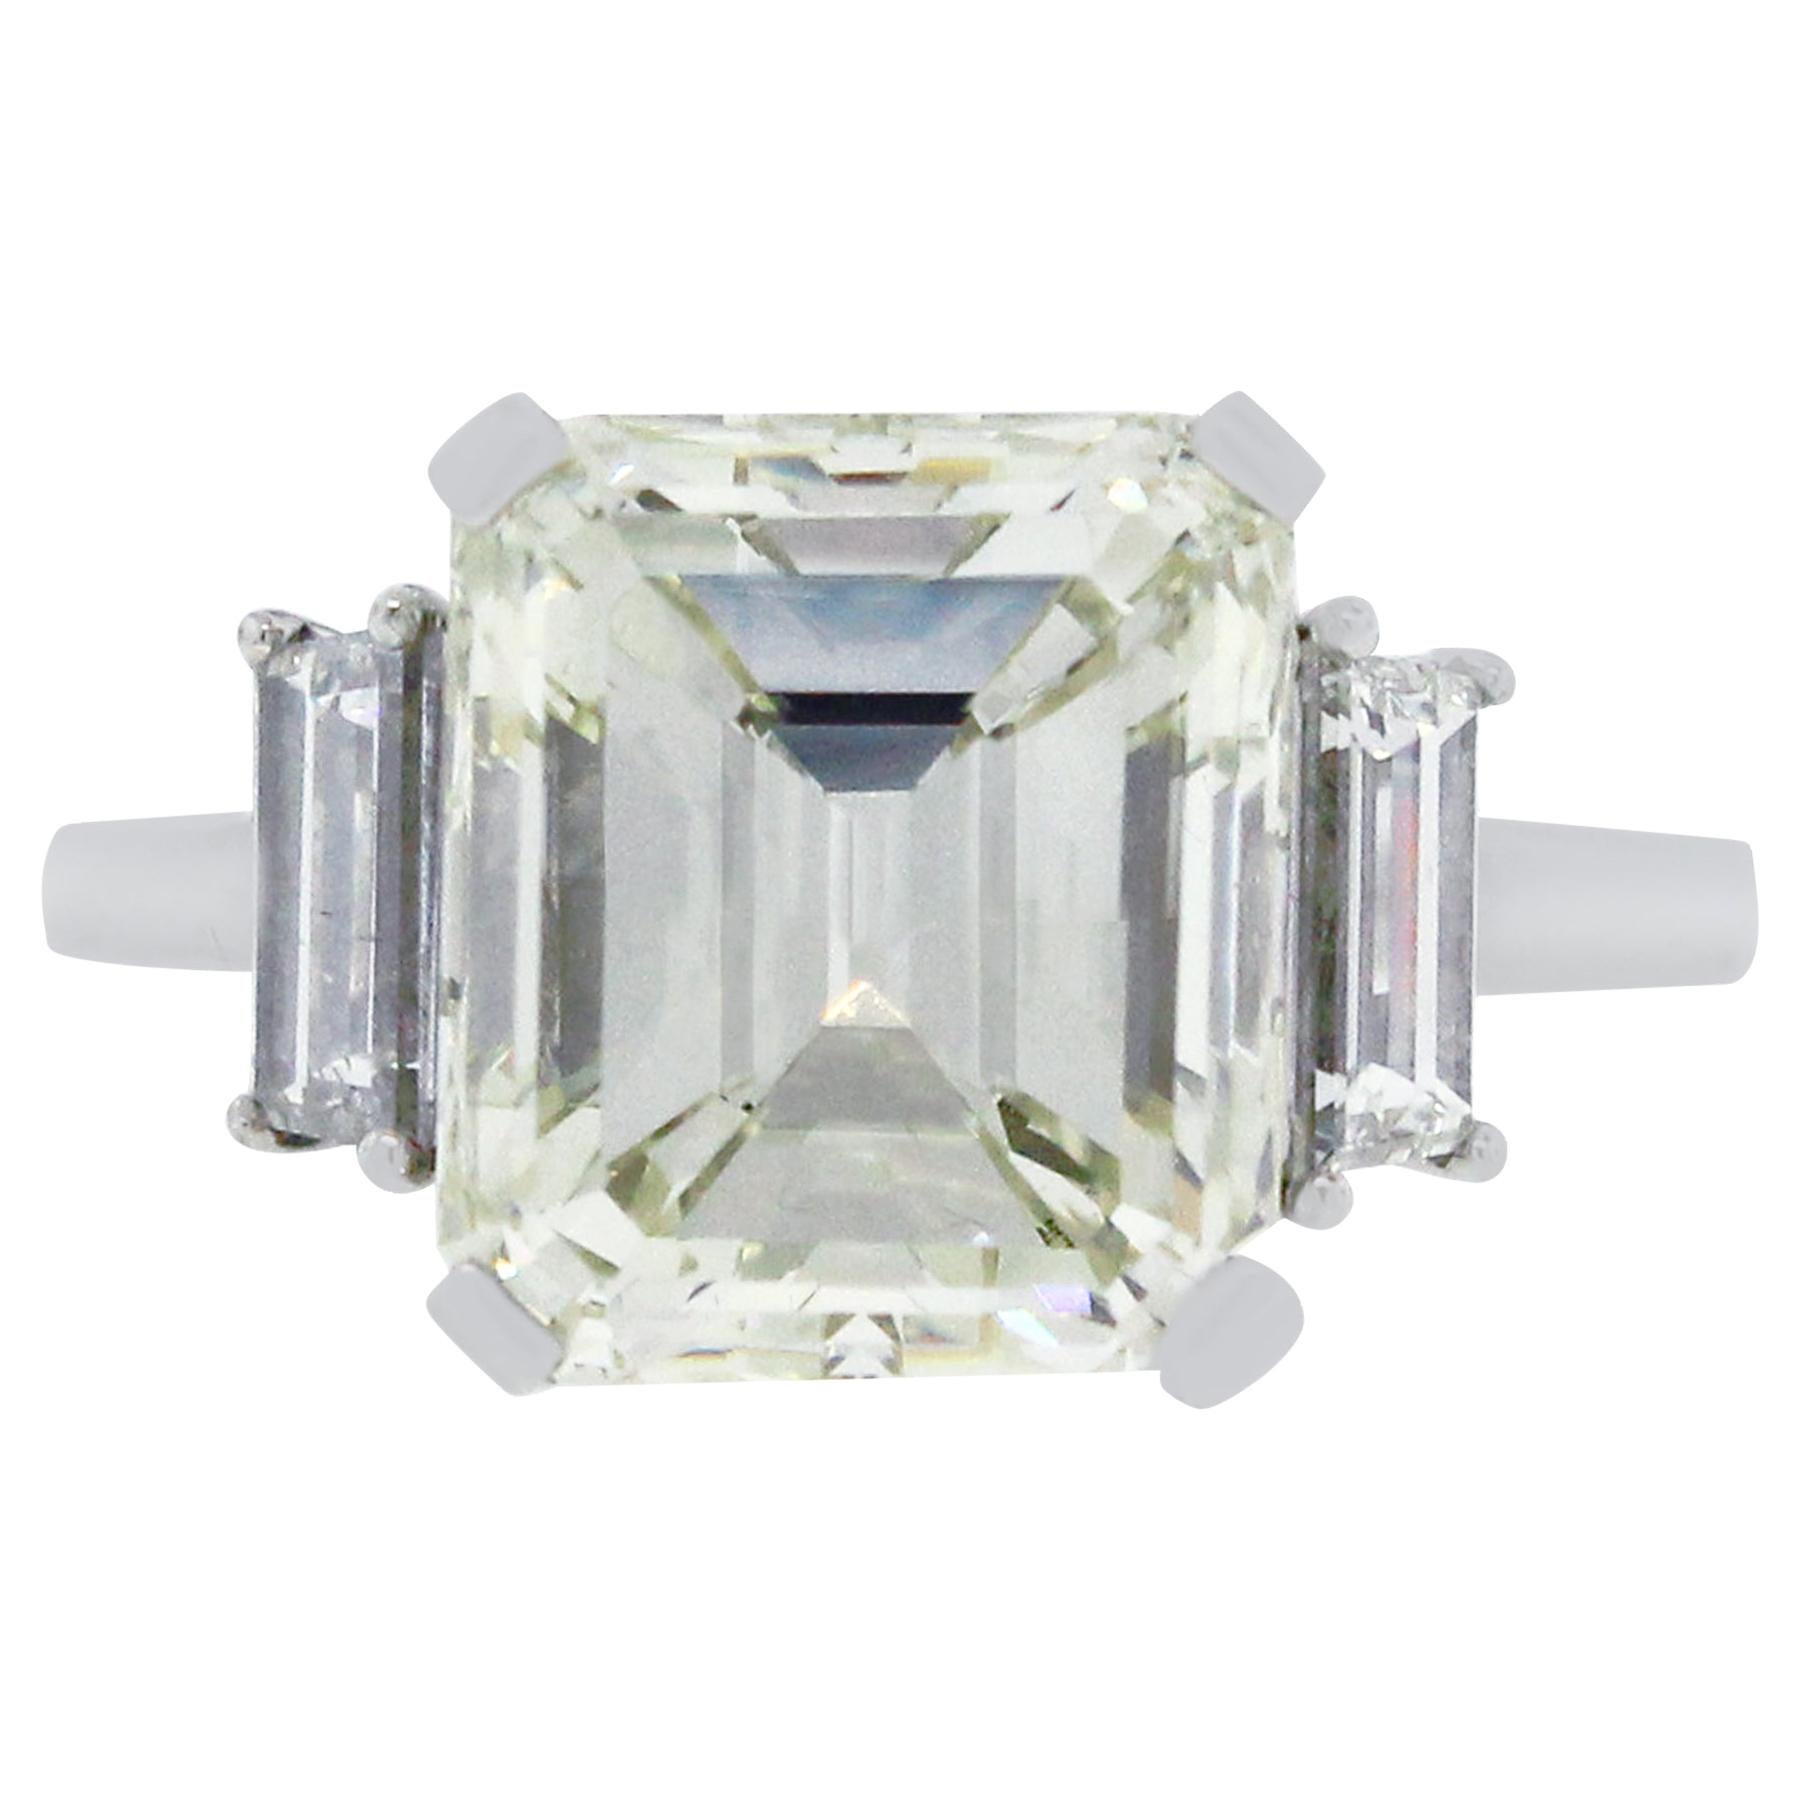 5.01 Carat Emerald Cut Diamond Engagement Ring